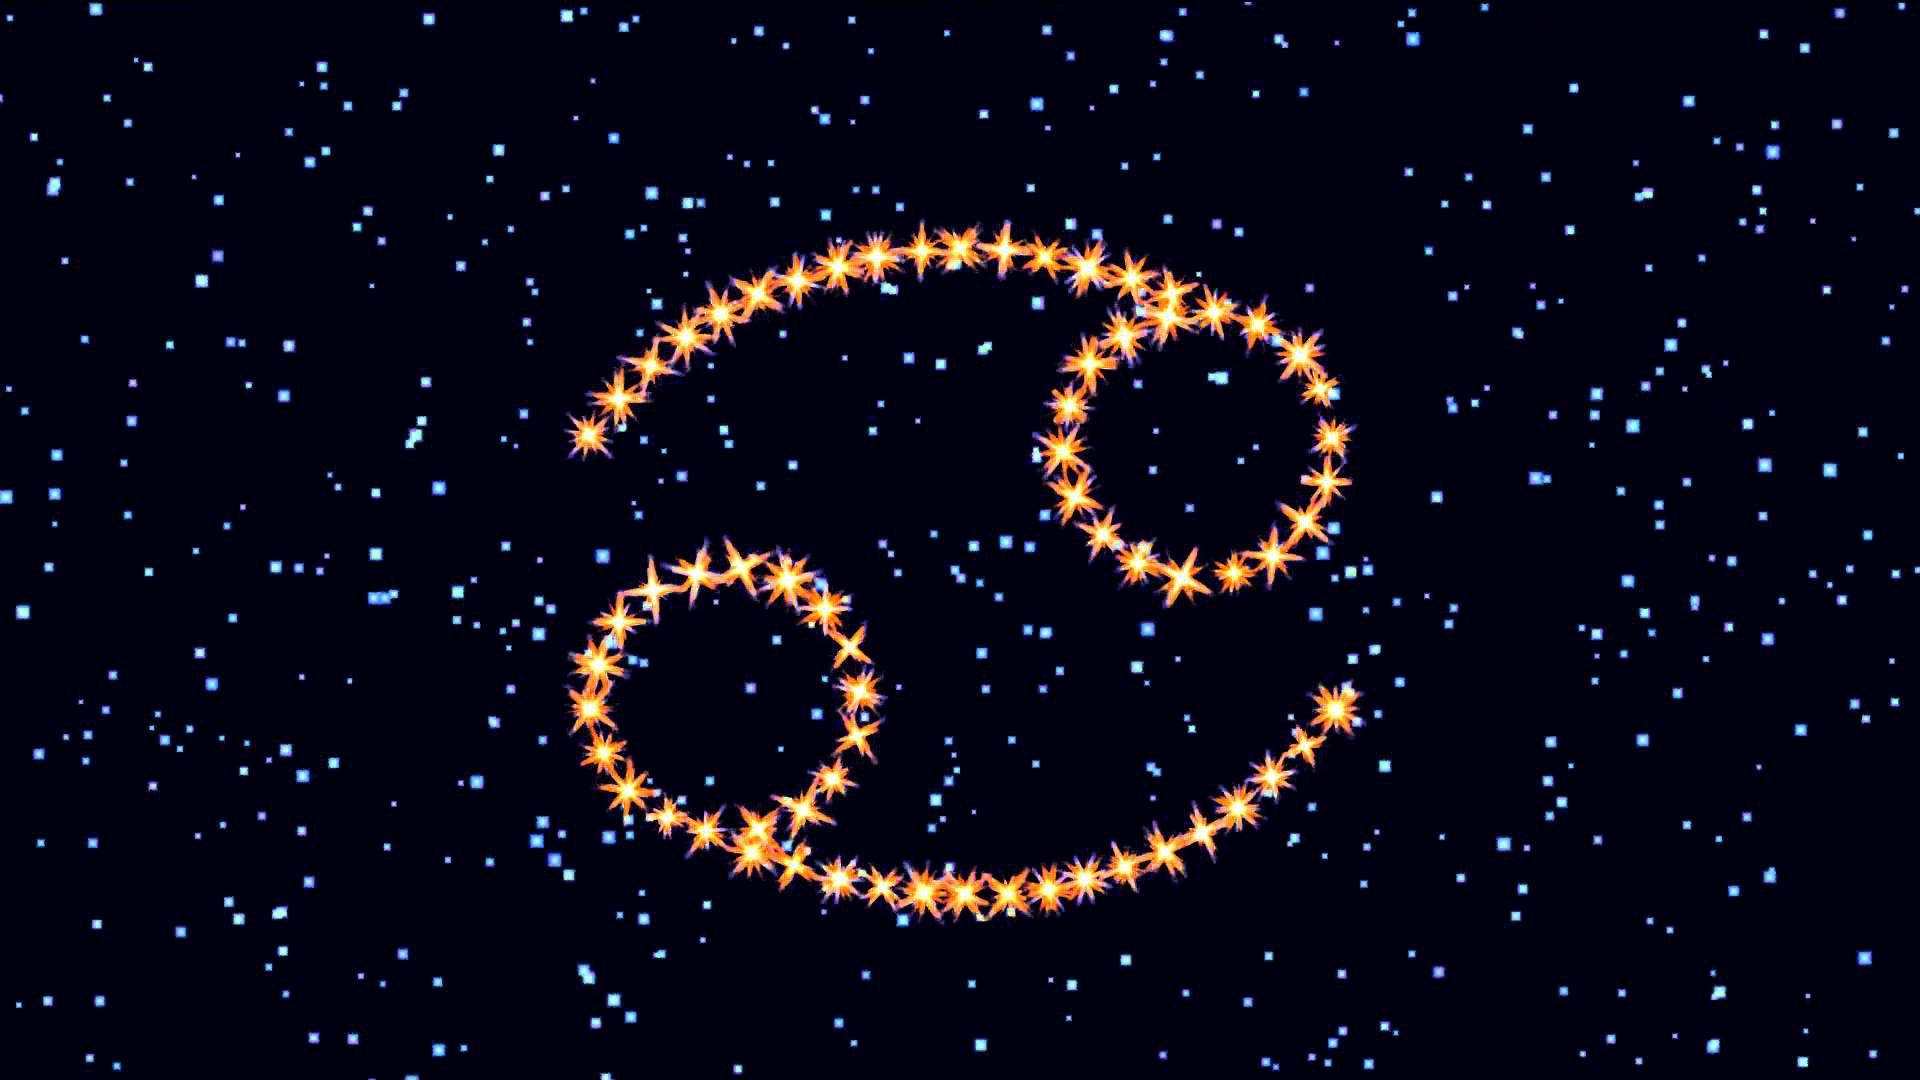 Star Sign Cancer Constellation Illustration Background